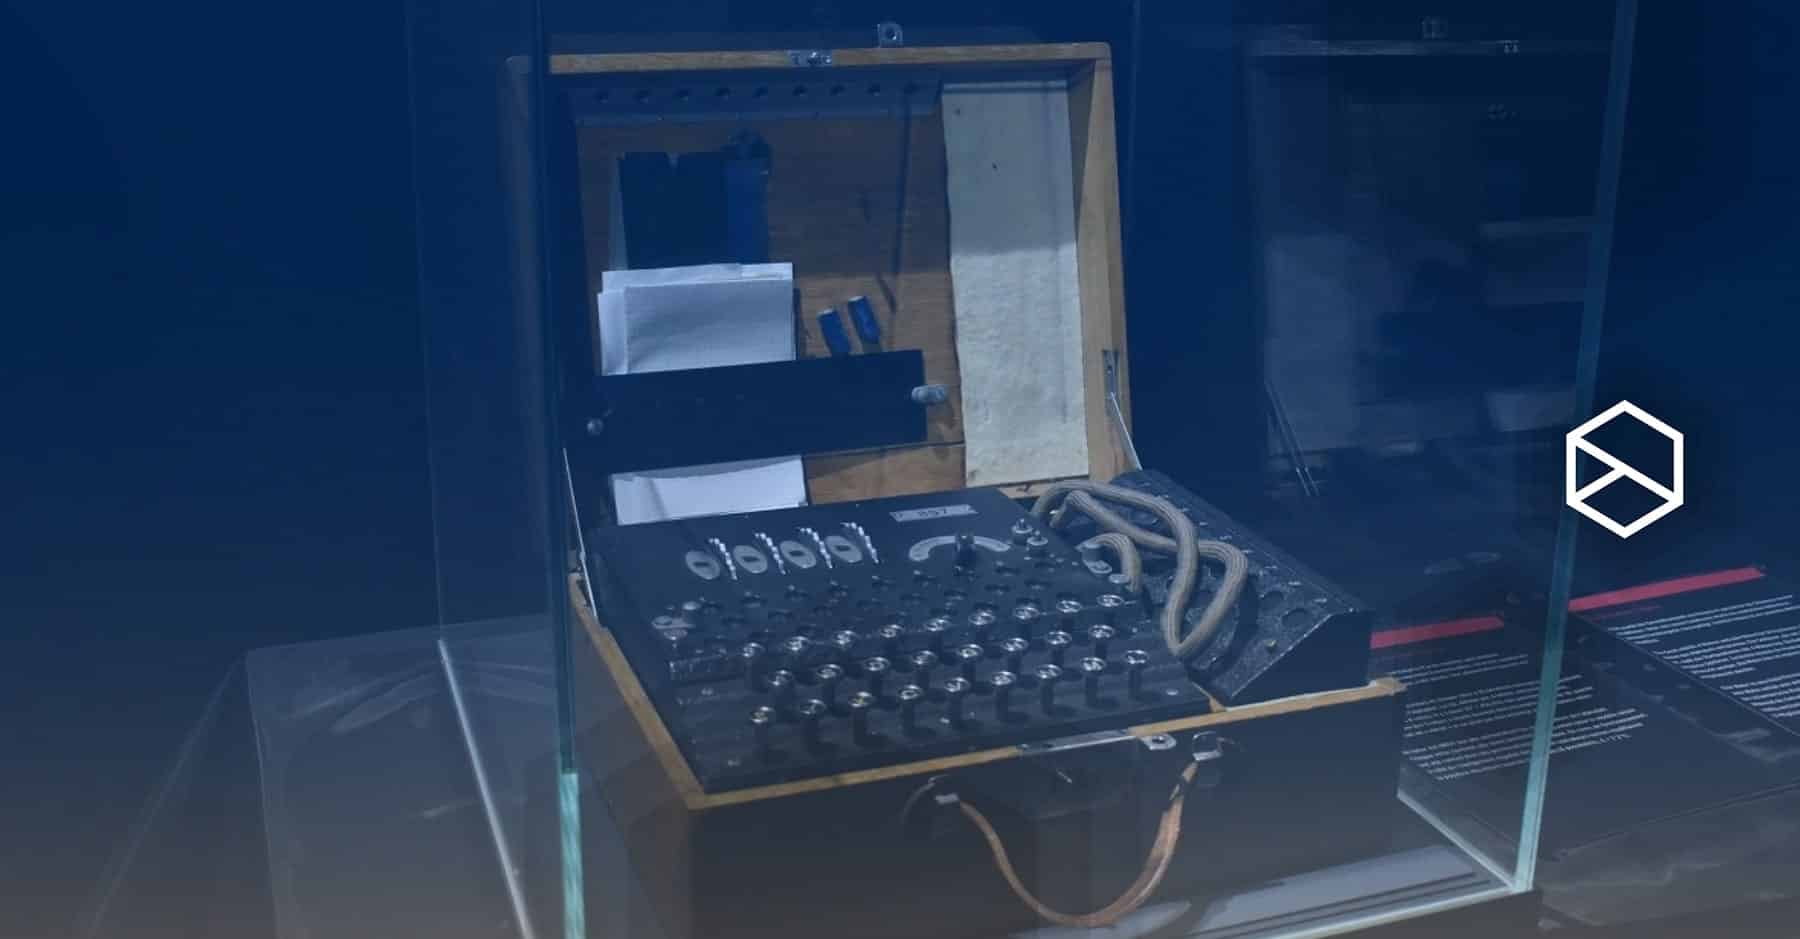 Enigma encryption machine